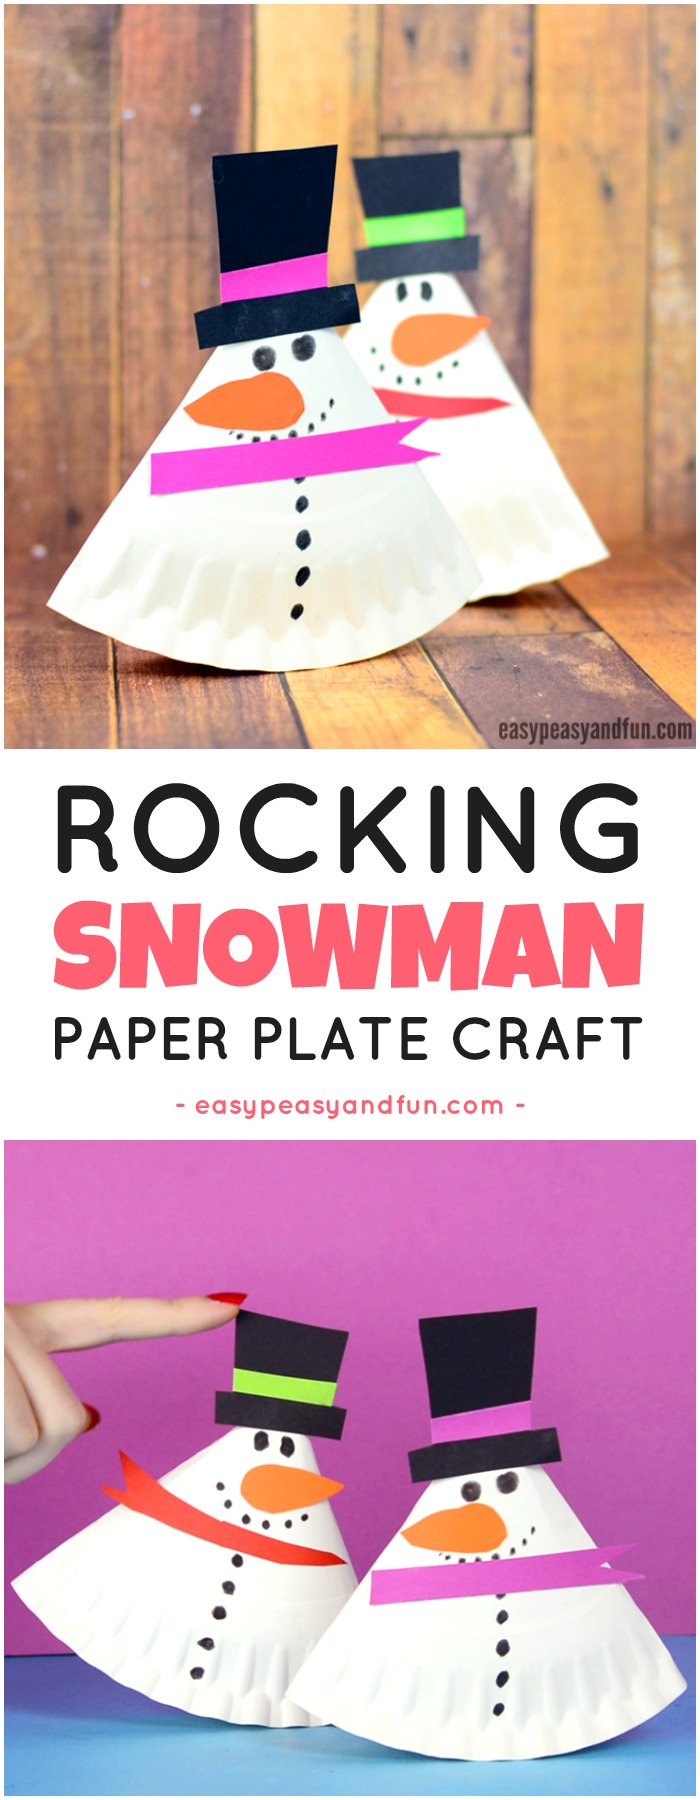 Rocking Paper Plate Snowman Craft for Kids. Fun paper plate craft for kids to make.